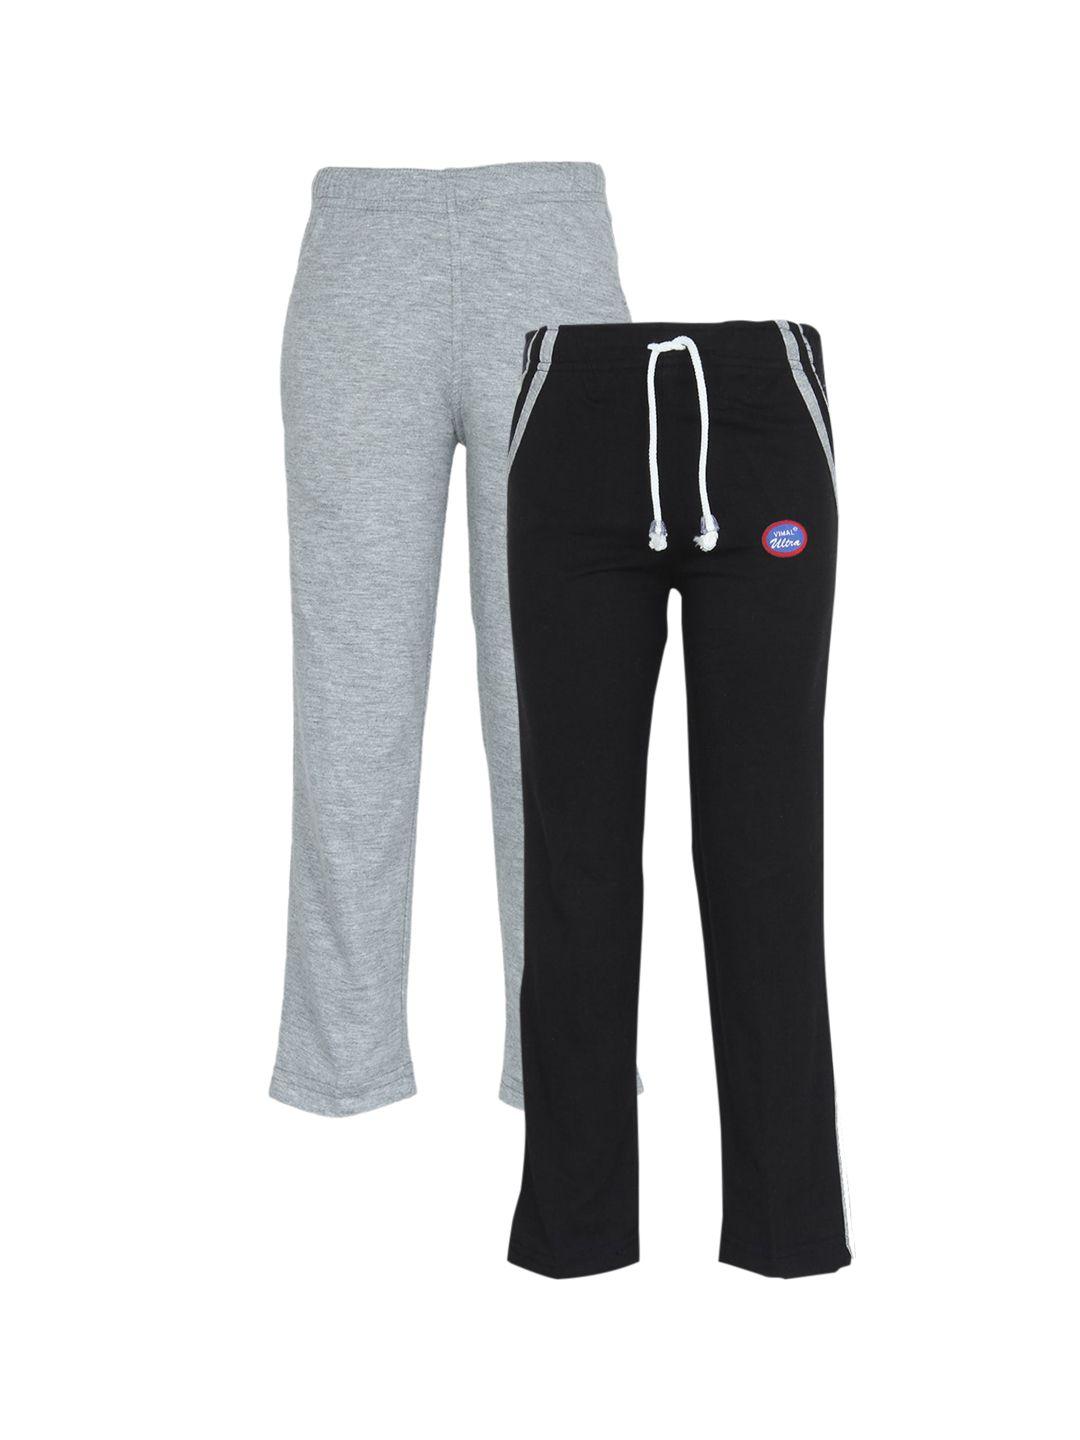 vimal jonney unisex kids pack of 2 black & grey solid track pants